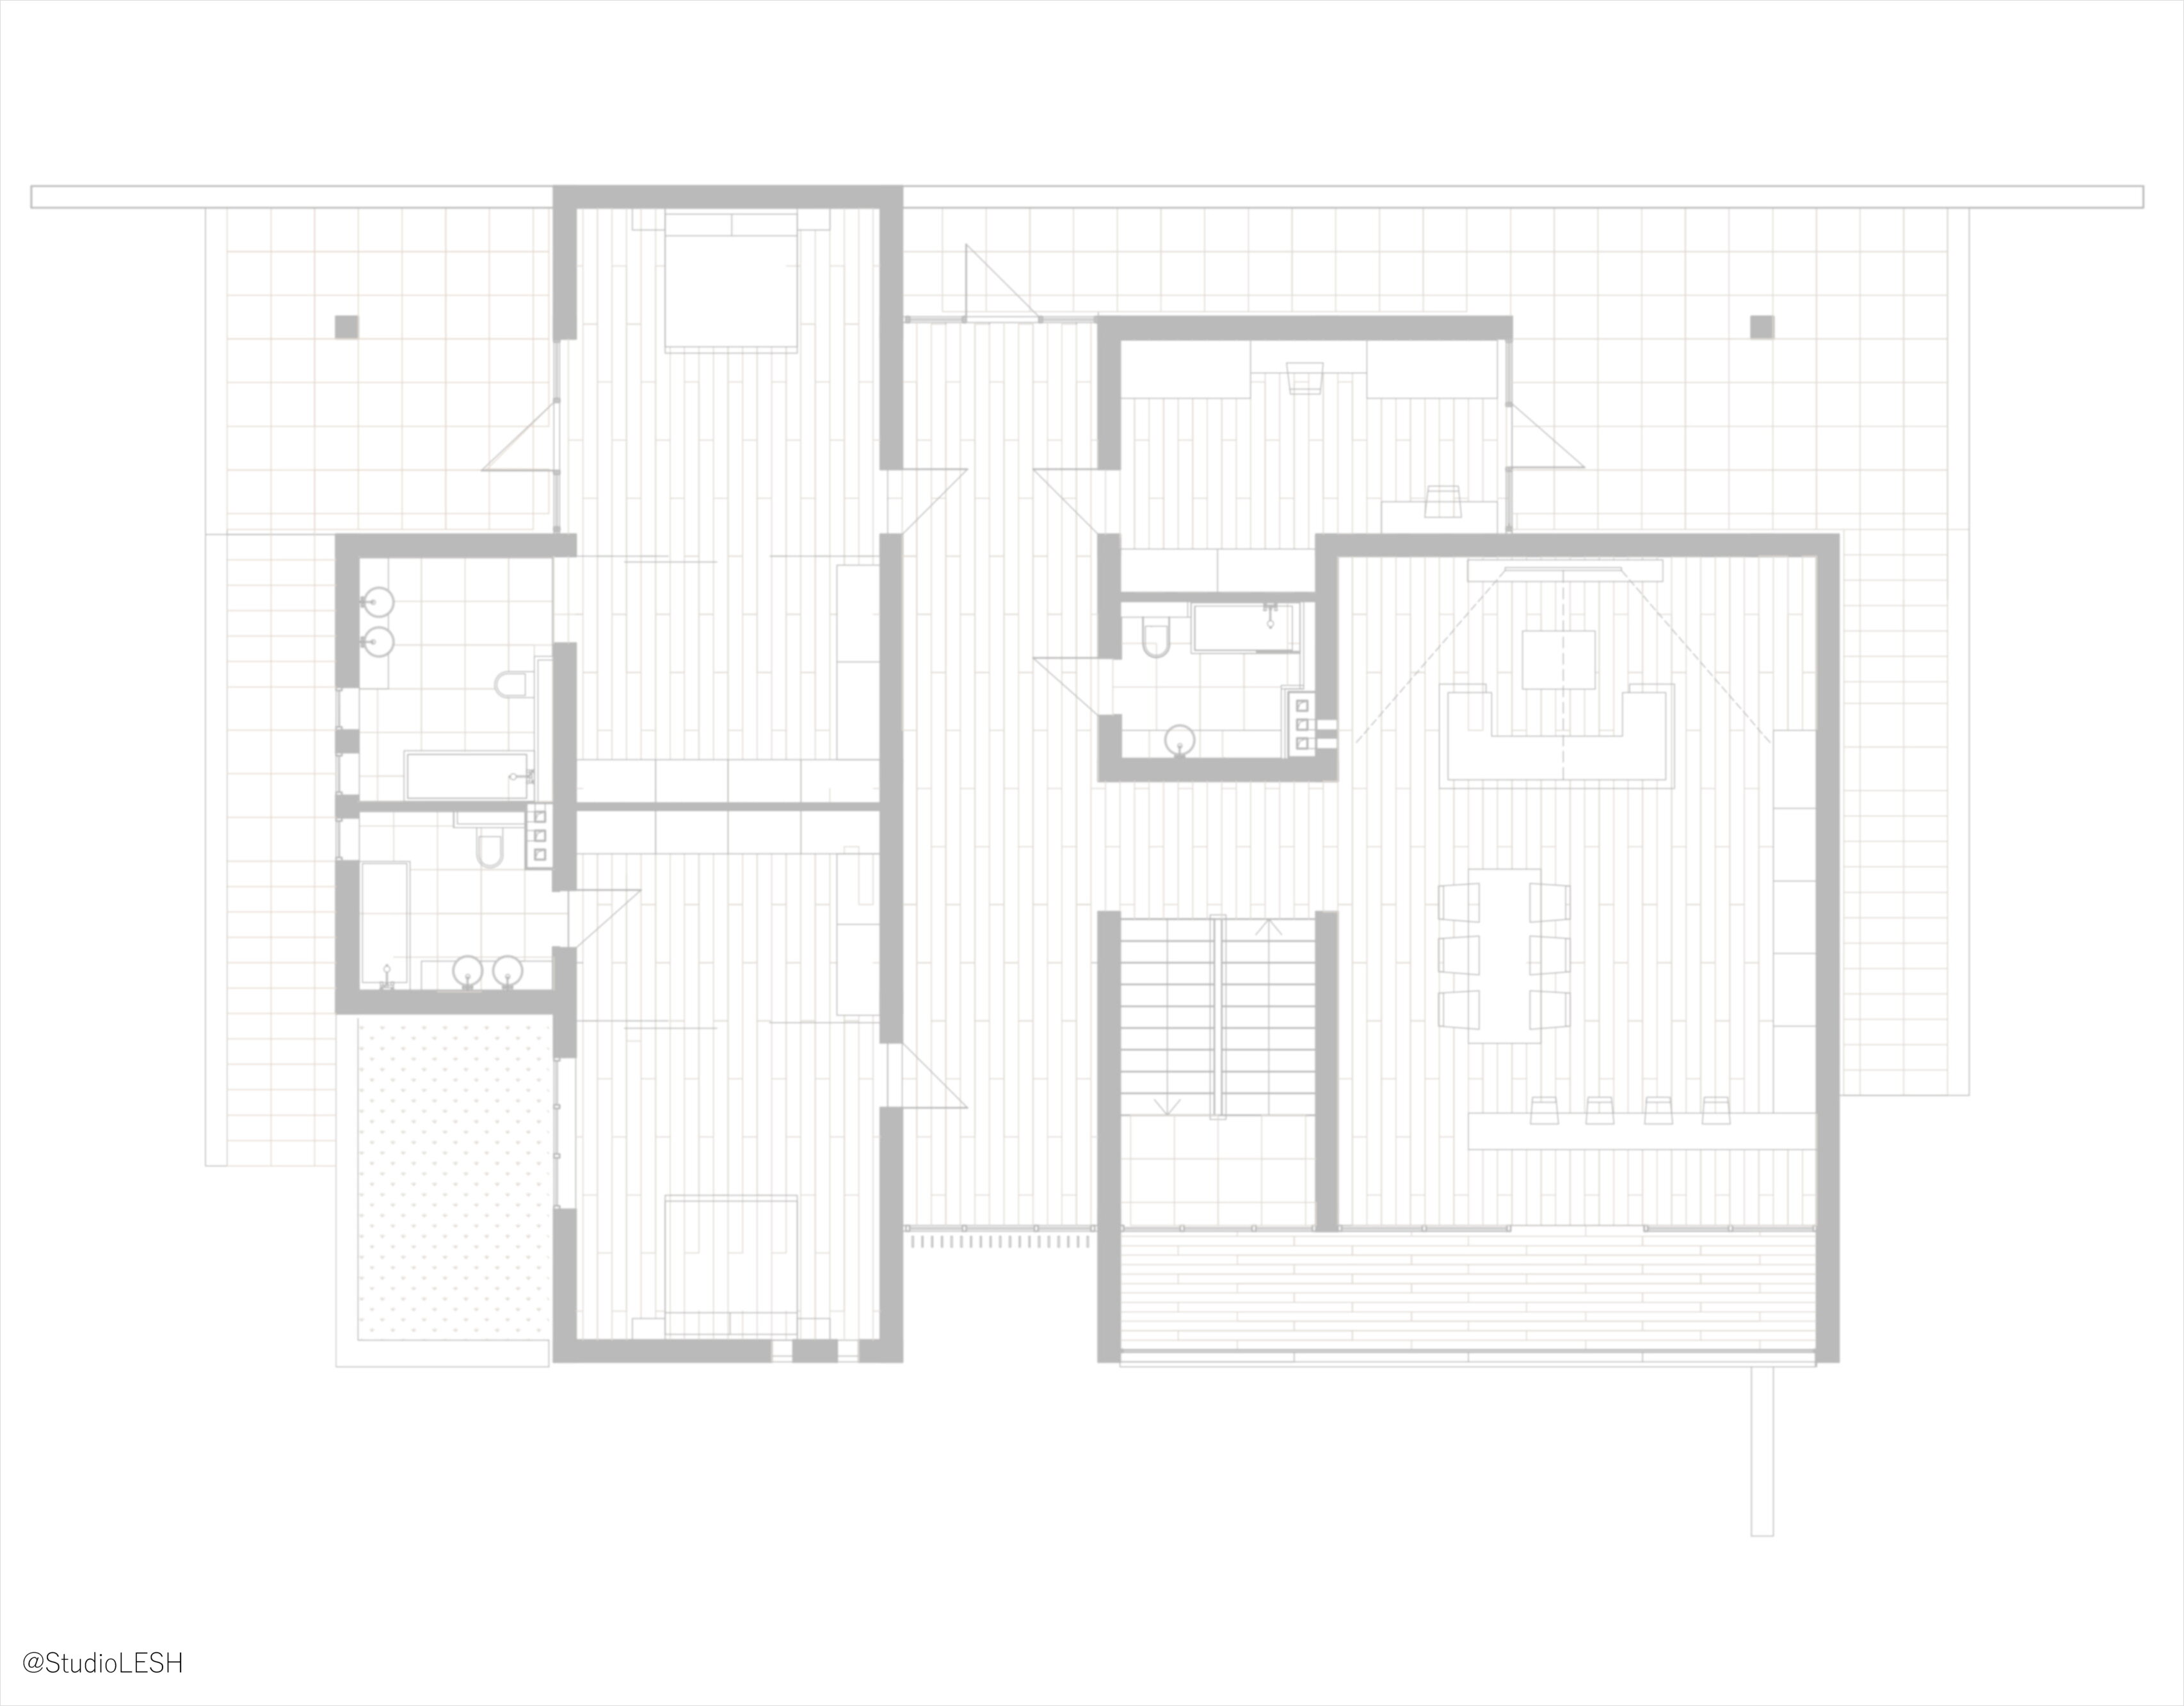 Design scheme of the house